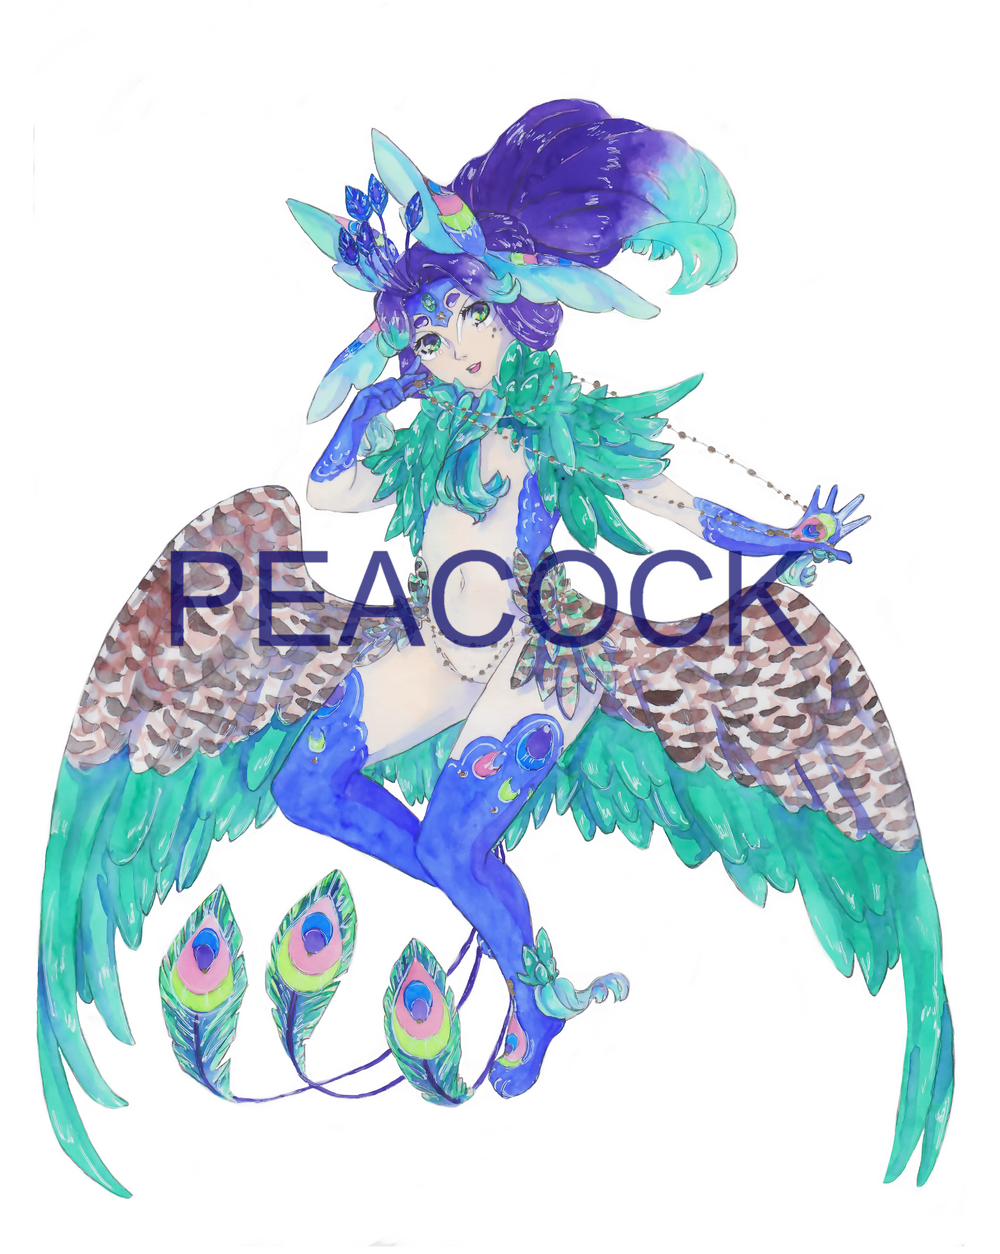 Peacock Deity by Rui Silverwing Rui Silverwing - Illustrations ART street